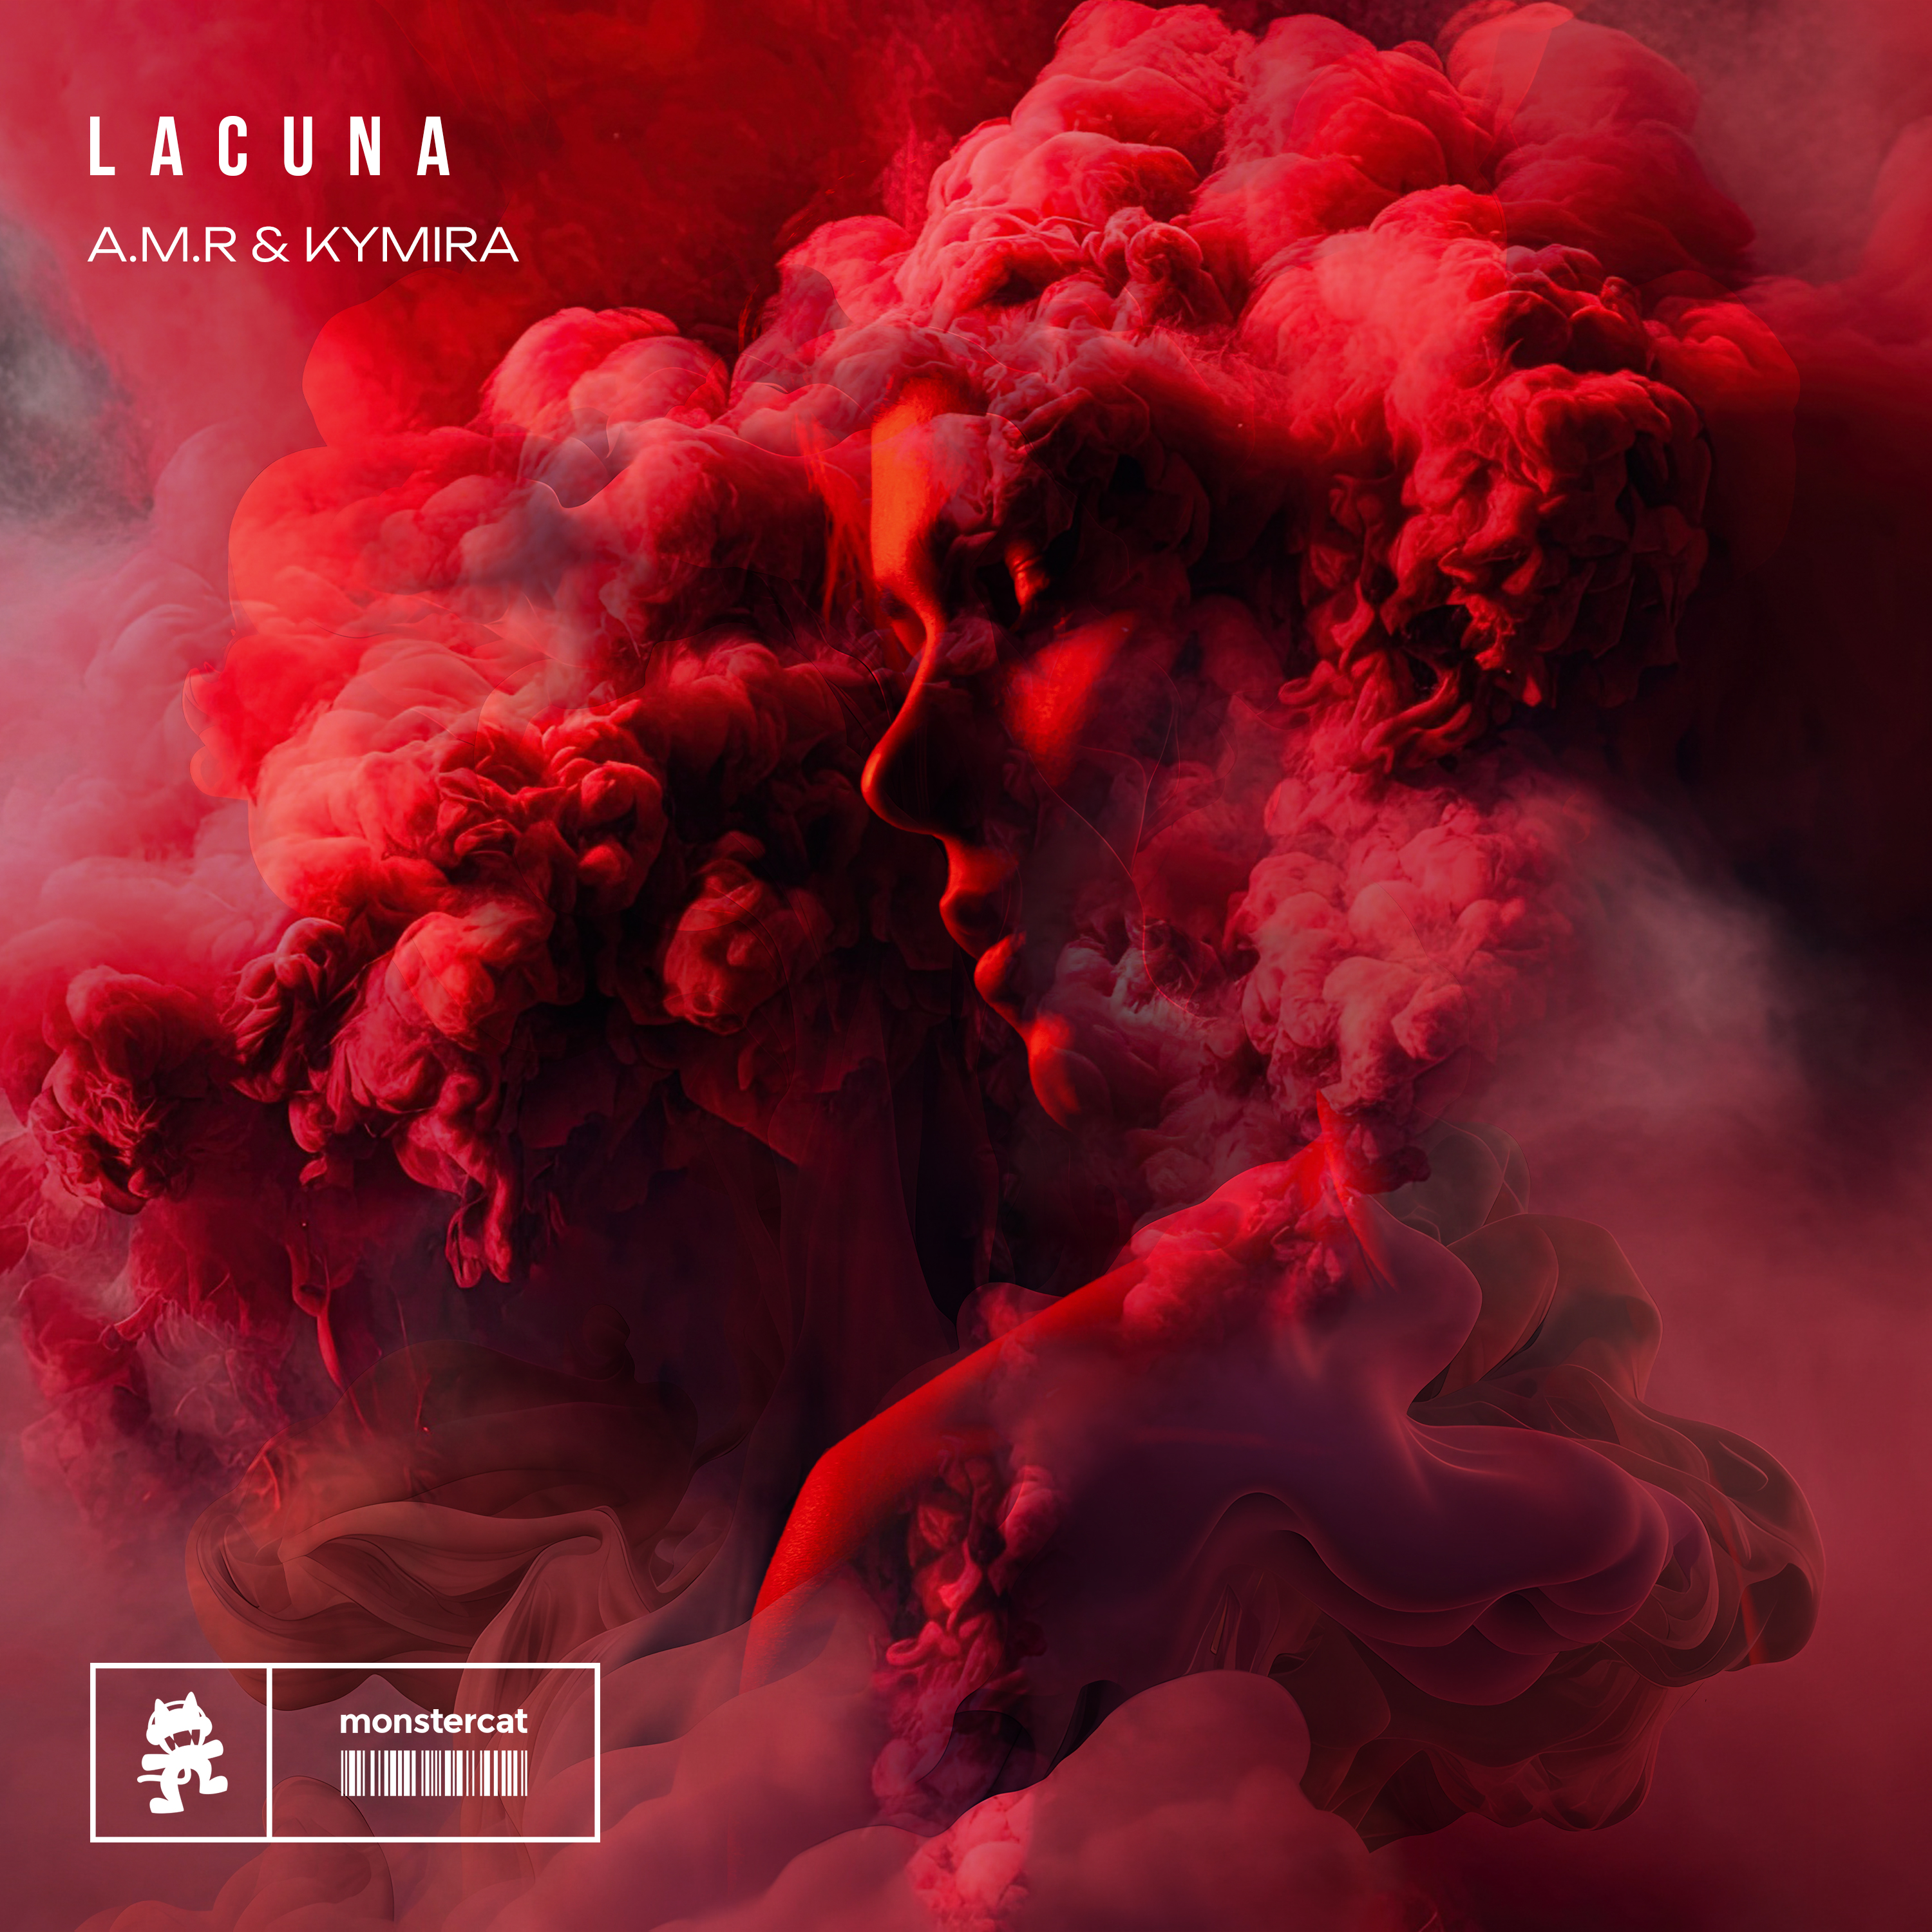 A.M.R & Kymira — Lacuna cover artwork